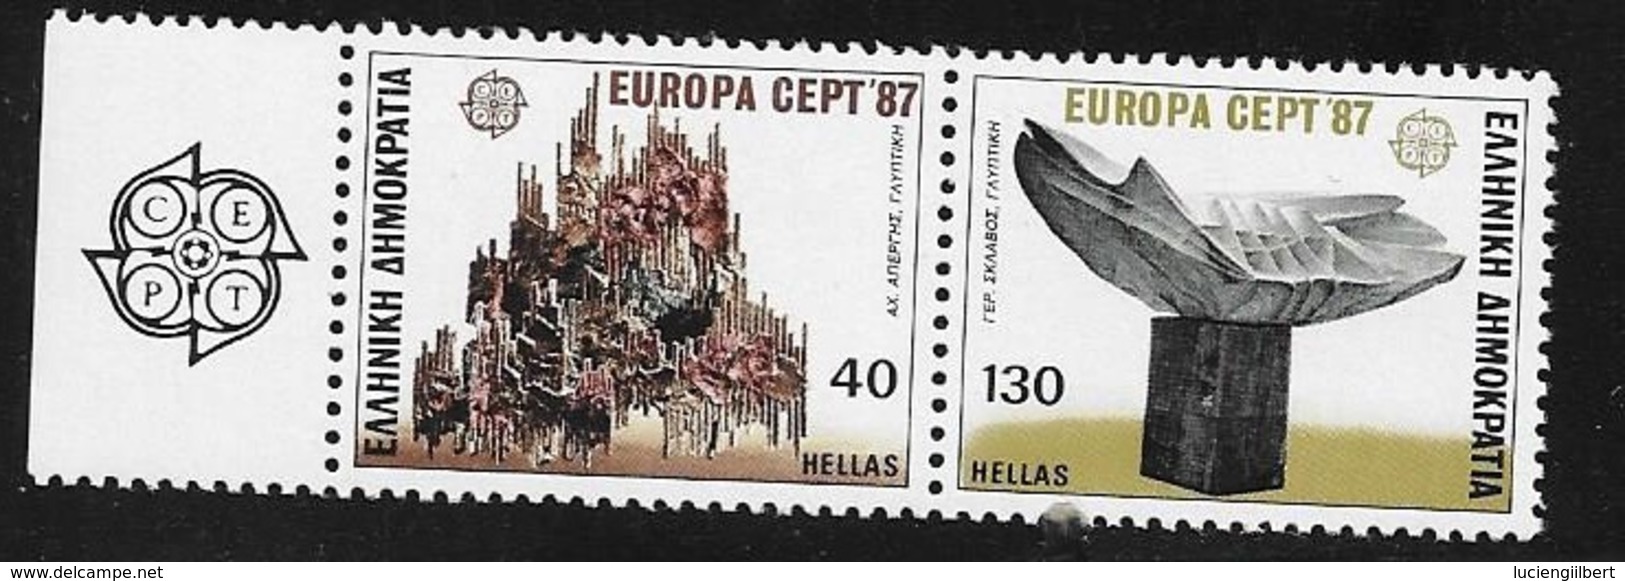 N° 1632 / 1633   EUROPA GRECE  - NEUF  - 1987  AVEC VIGNETTE - Unused Stamps